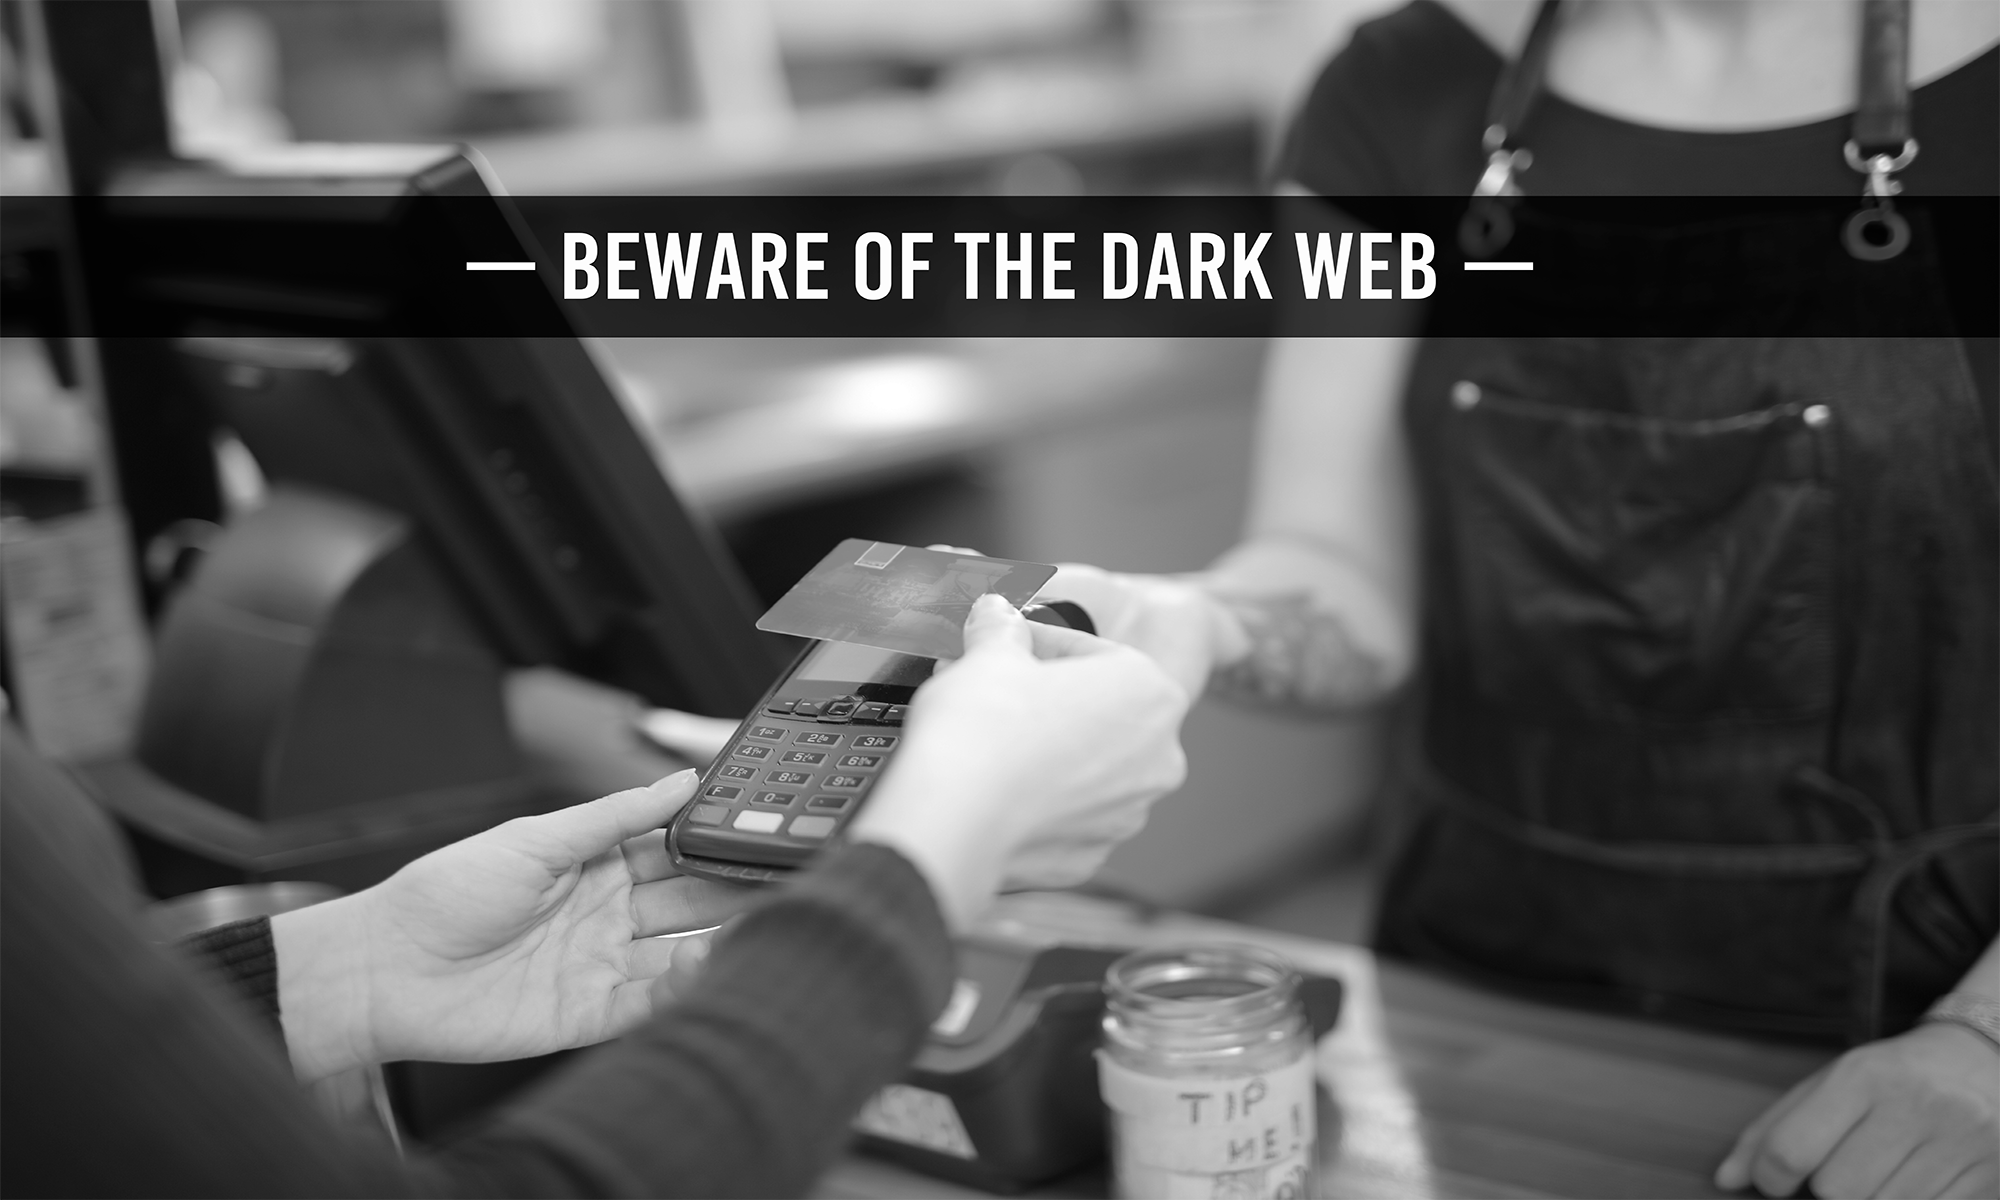 Beware of the dark web